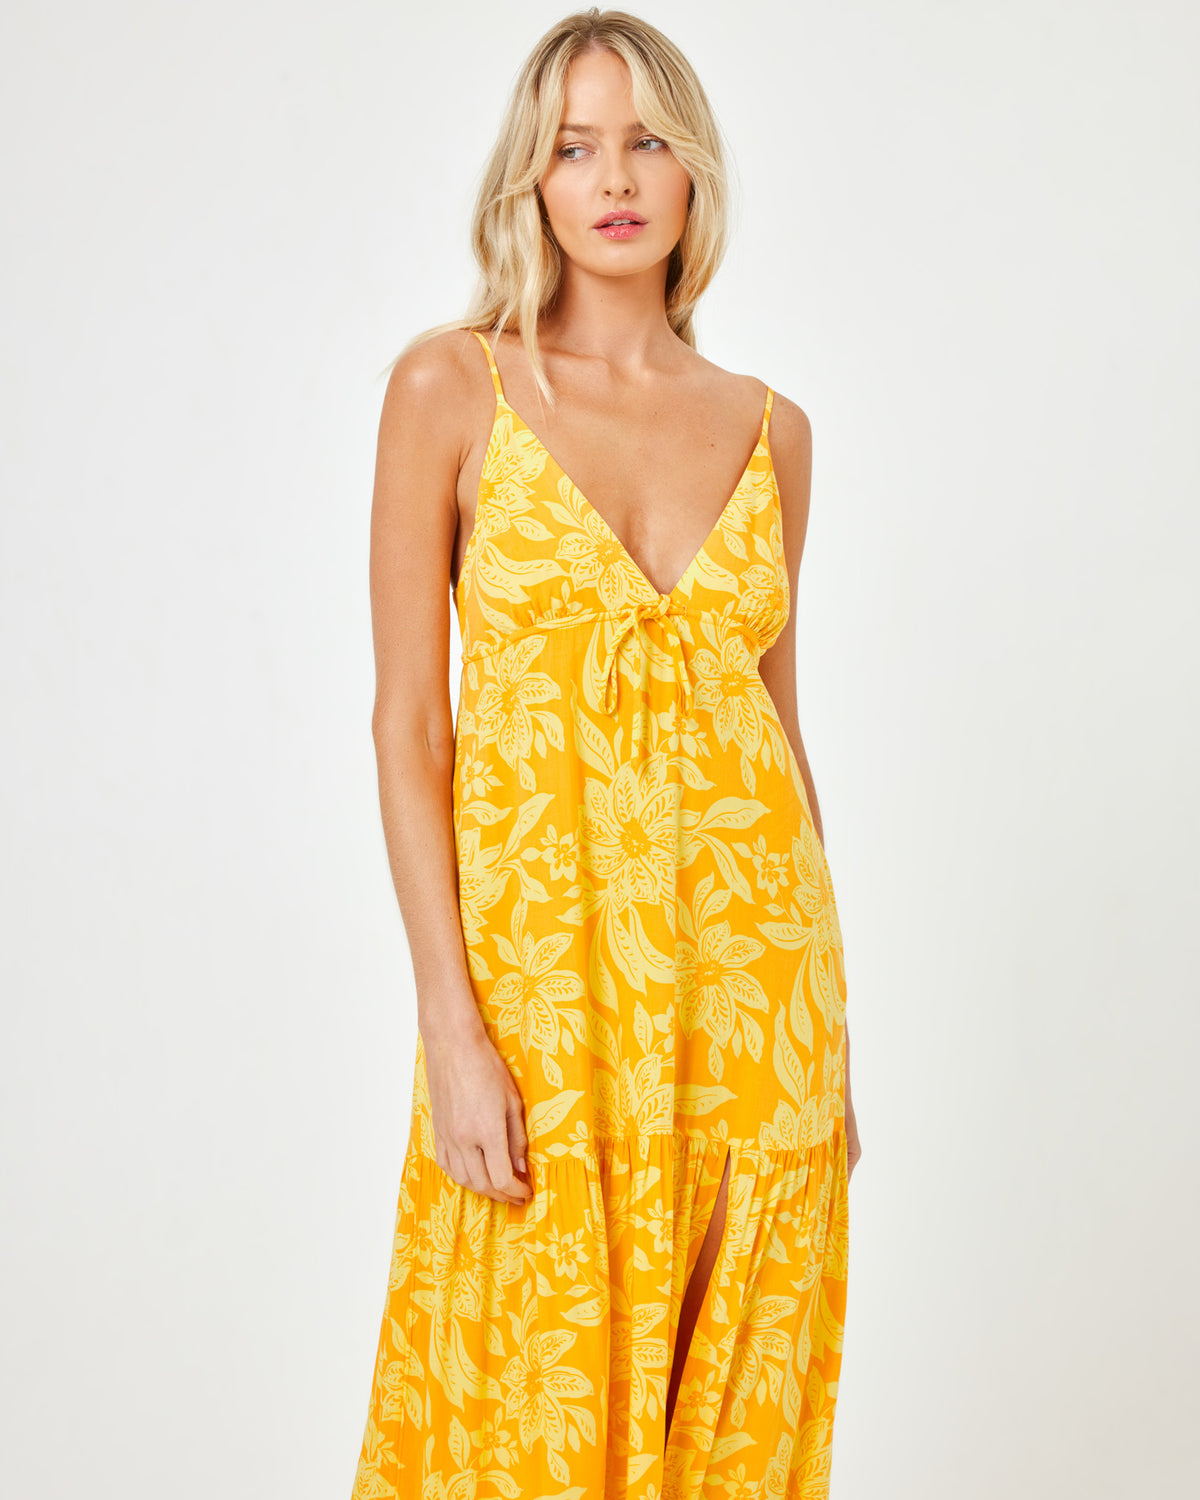 Printed Victoria Dress - Golden Hour Blooms Golden Hour Blooms | Model: Lura (size: S)